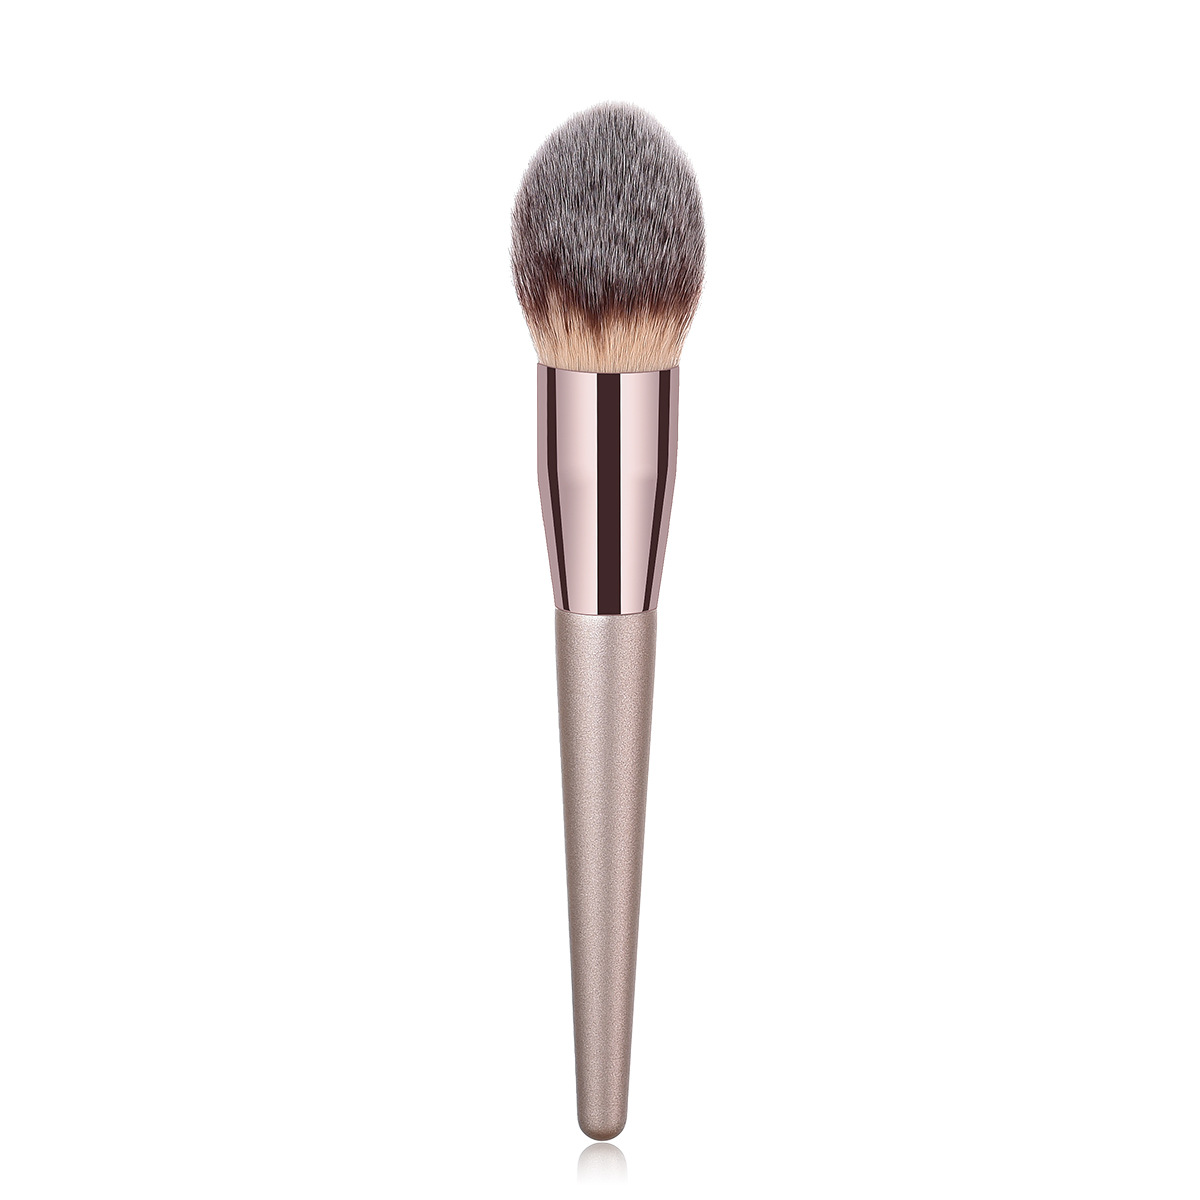 Hot 1PC Champagne Makeup Brushes Set For Eyeshadow Pallete Foundation Powder Concealer Eyeliner Blending Brush Cosmetics Tool